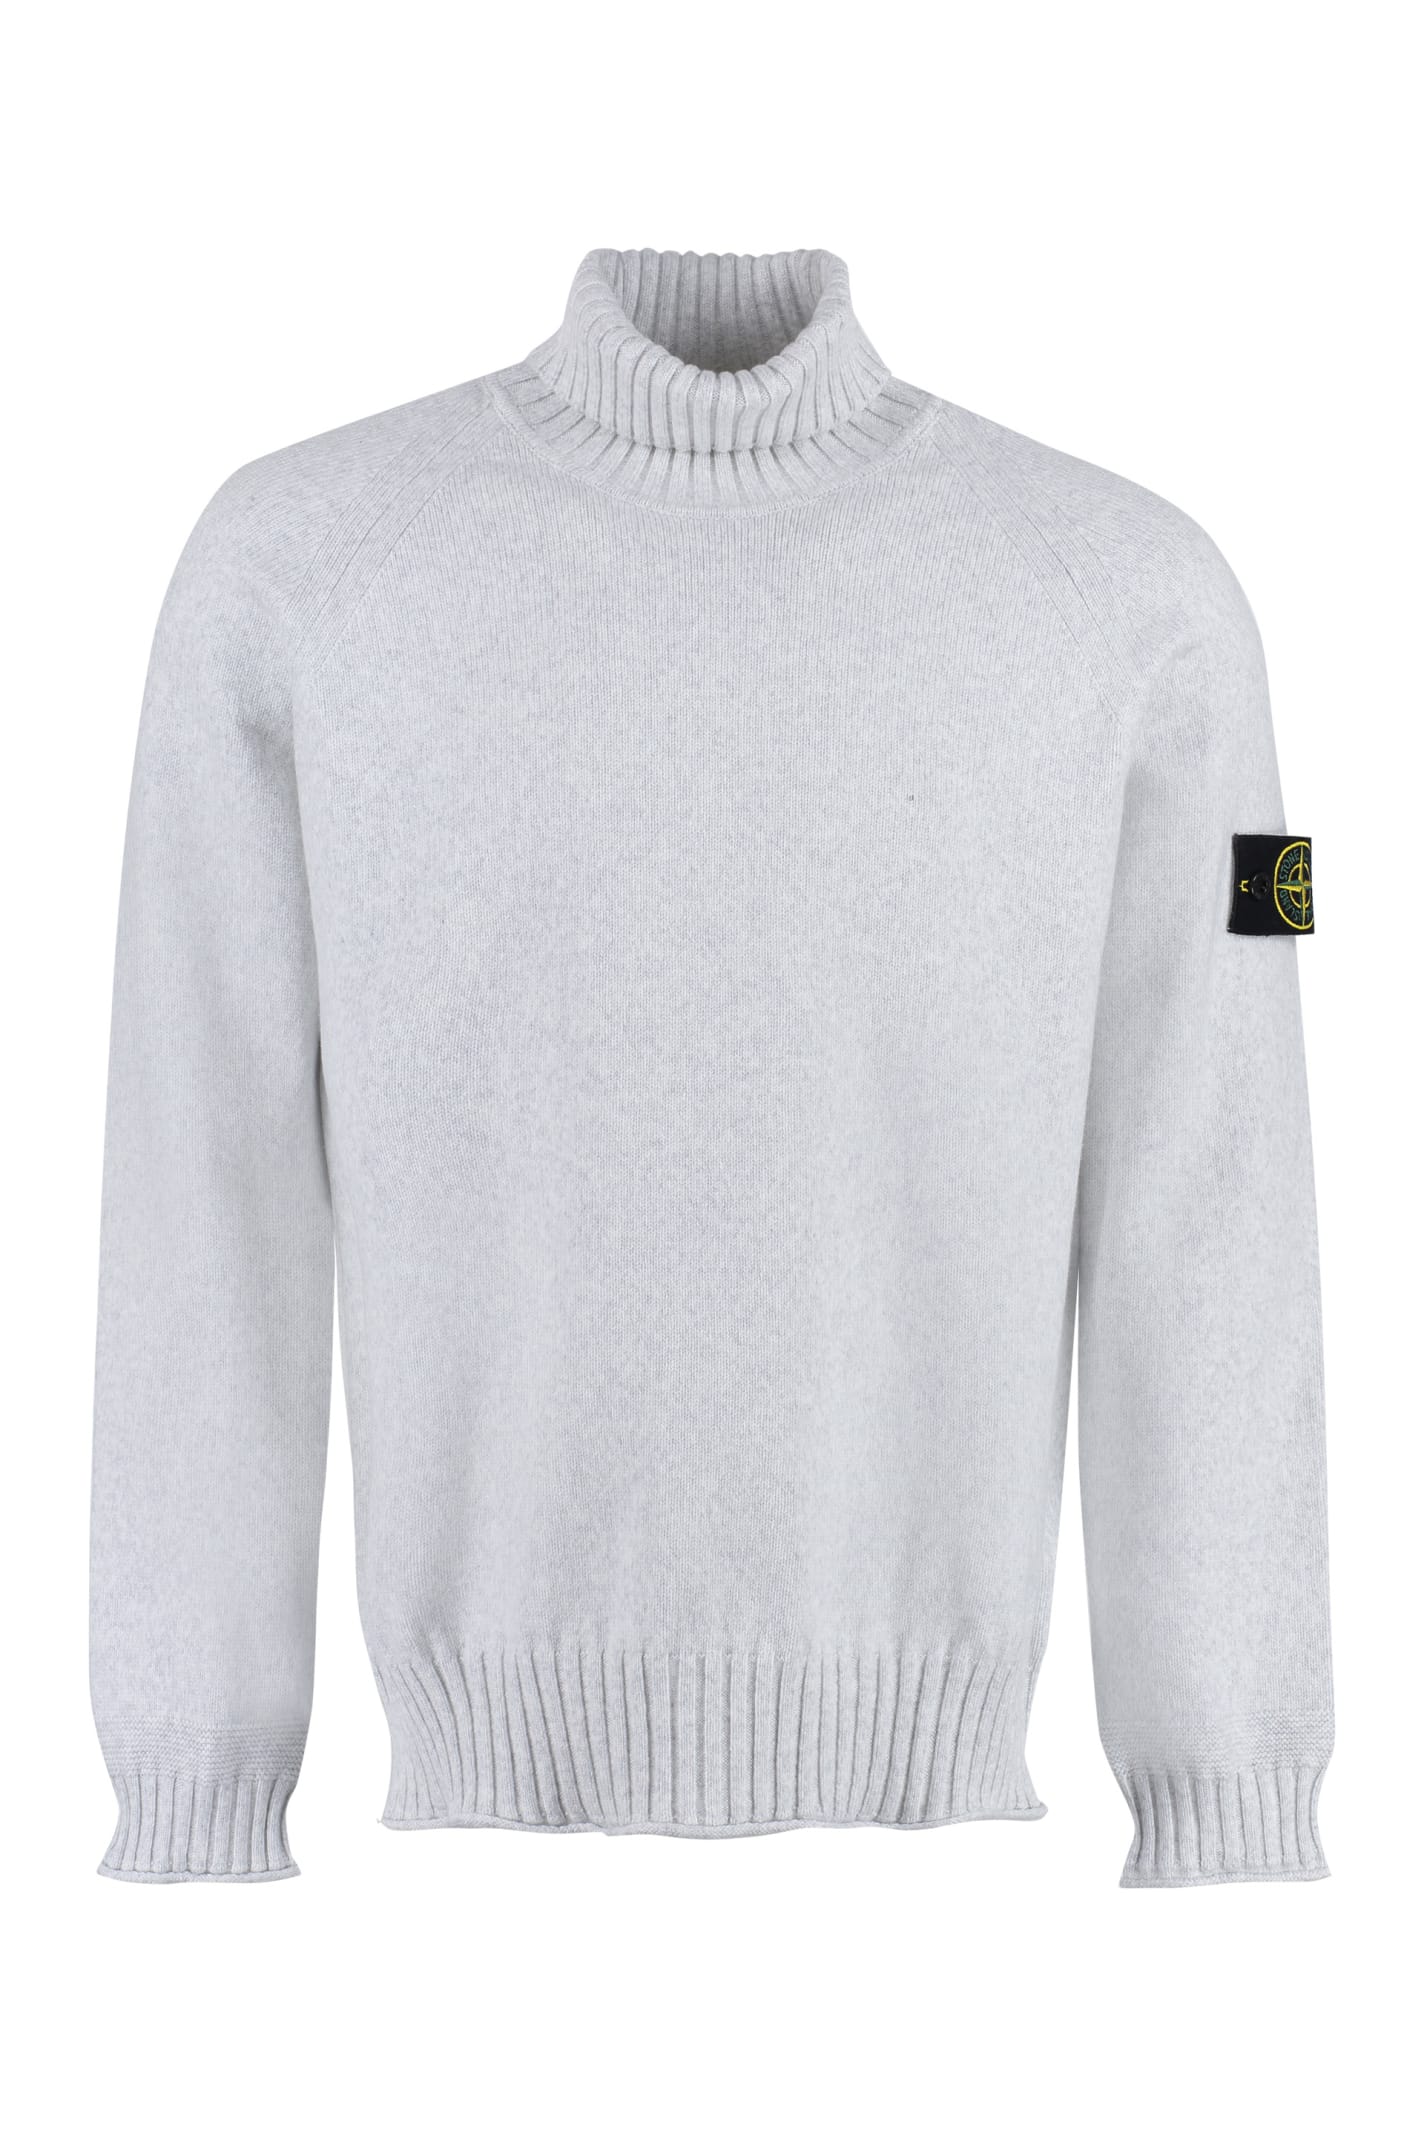 Stone Island Cotton-blend Sweater